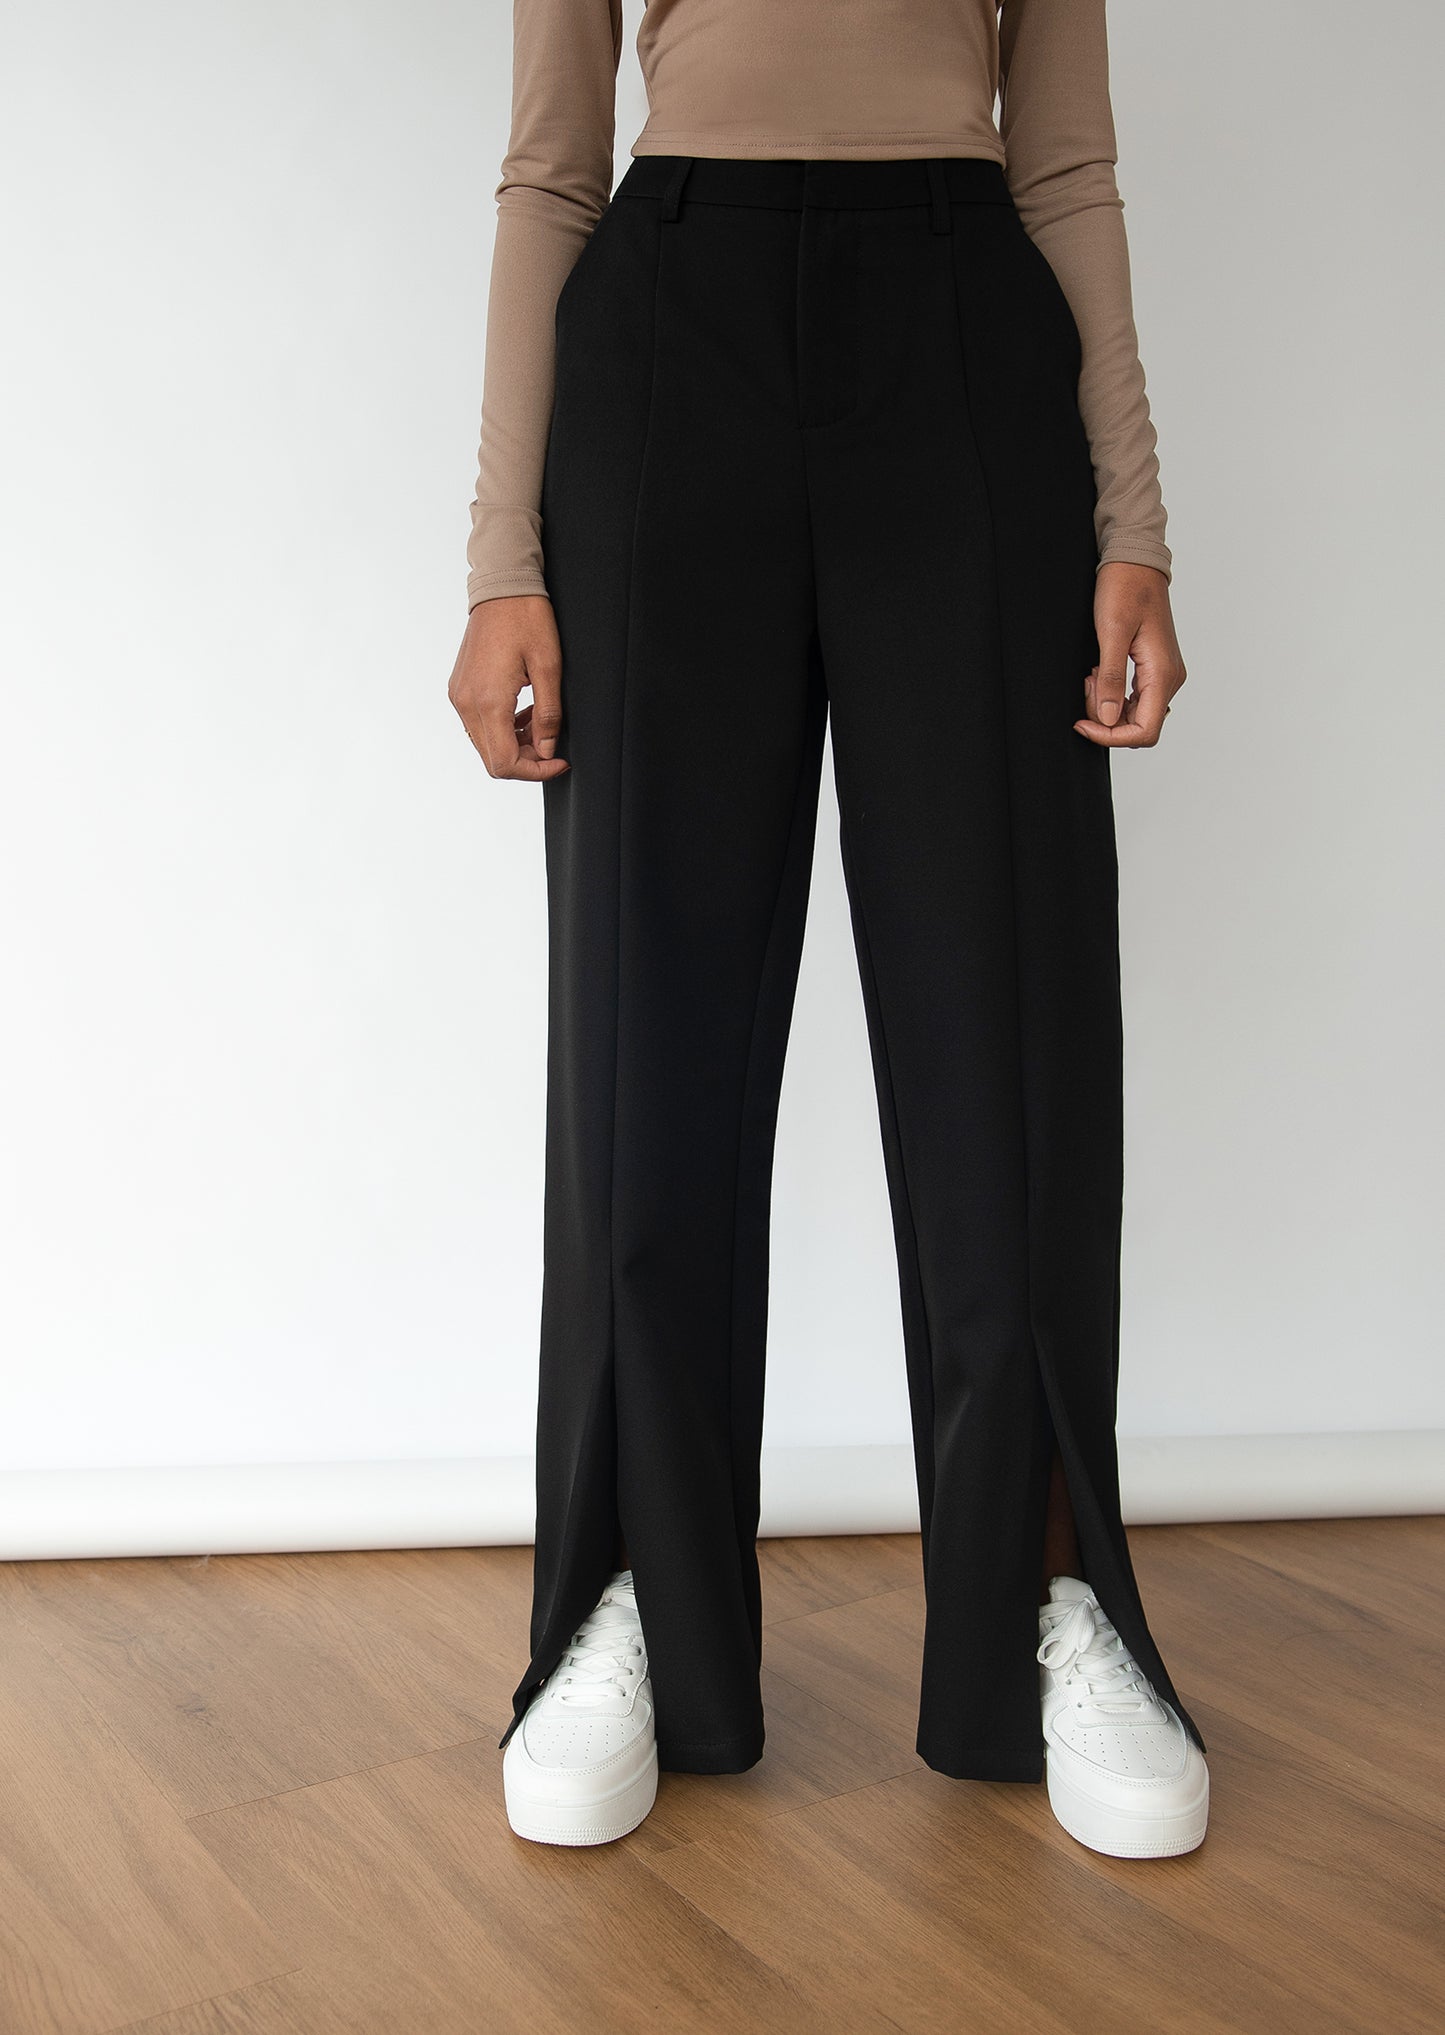 Split front trouser in black